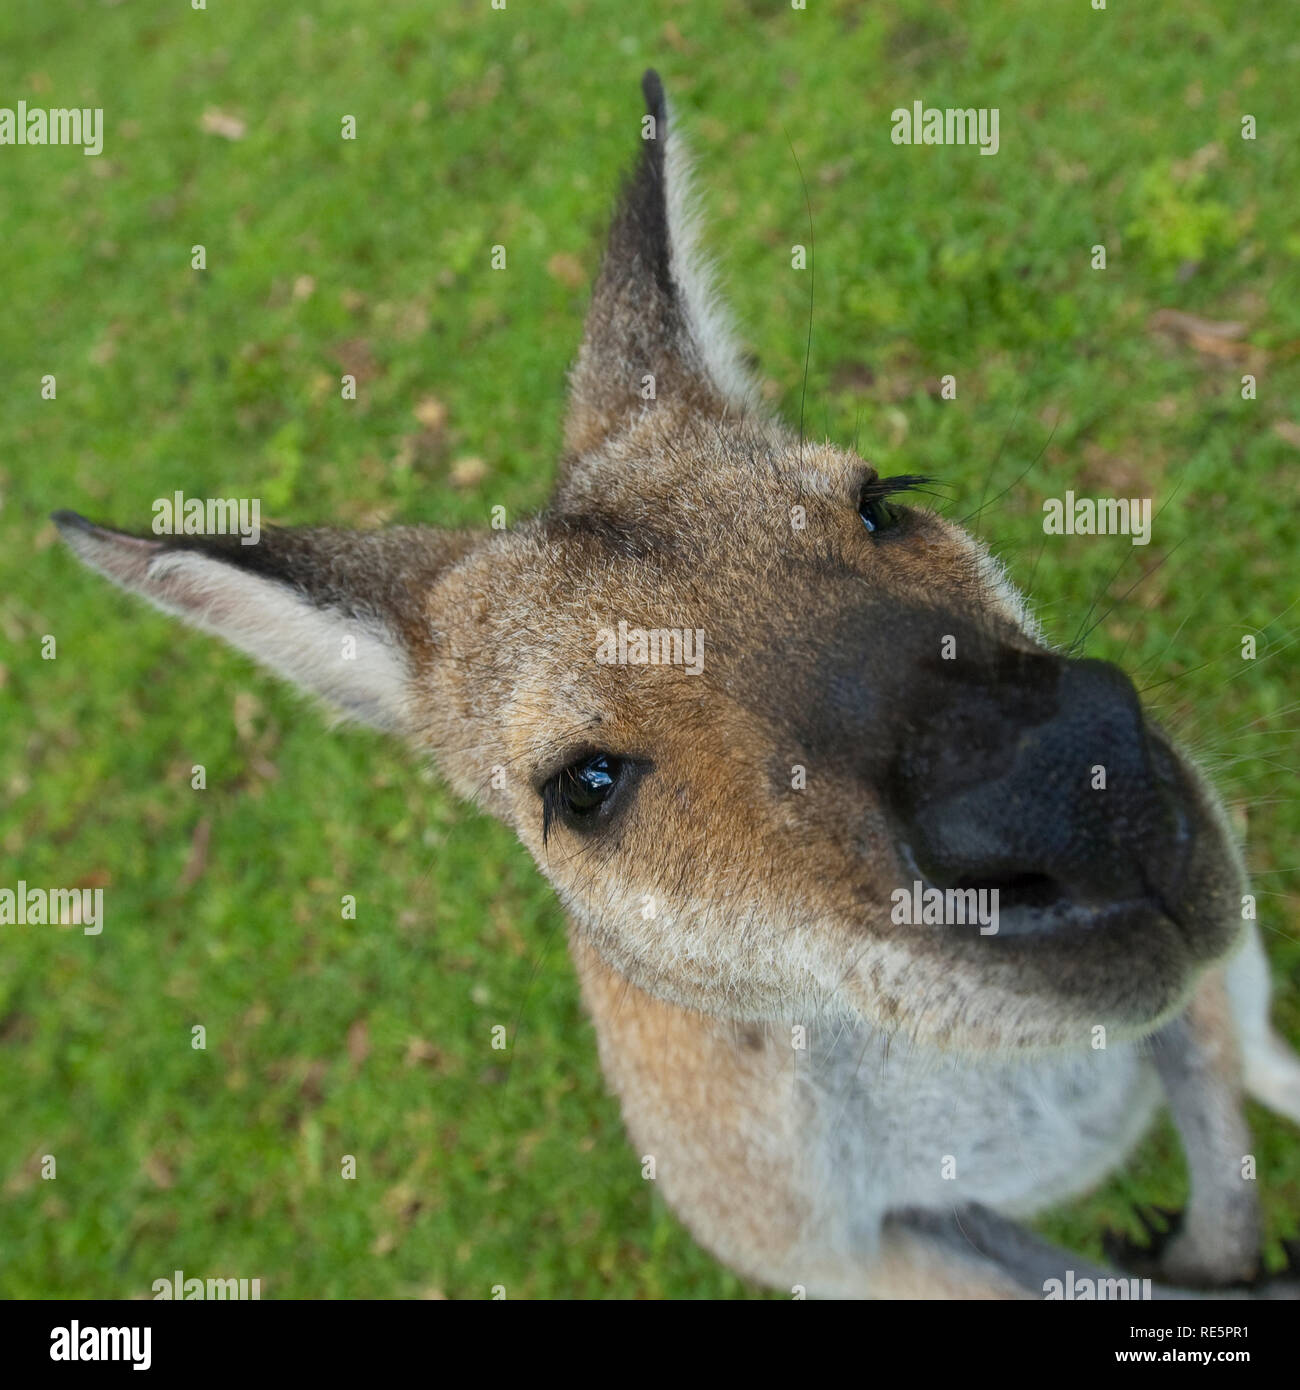 Wallaby face, close up Stock Photo